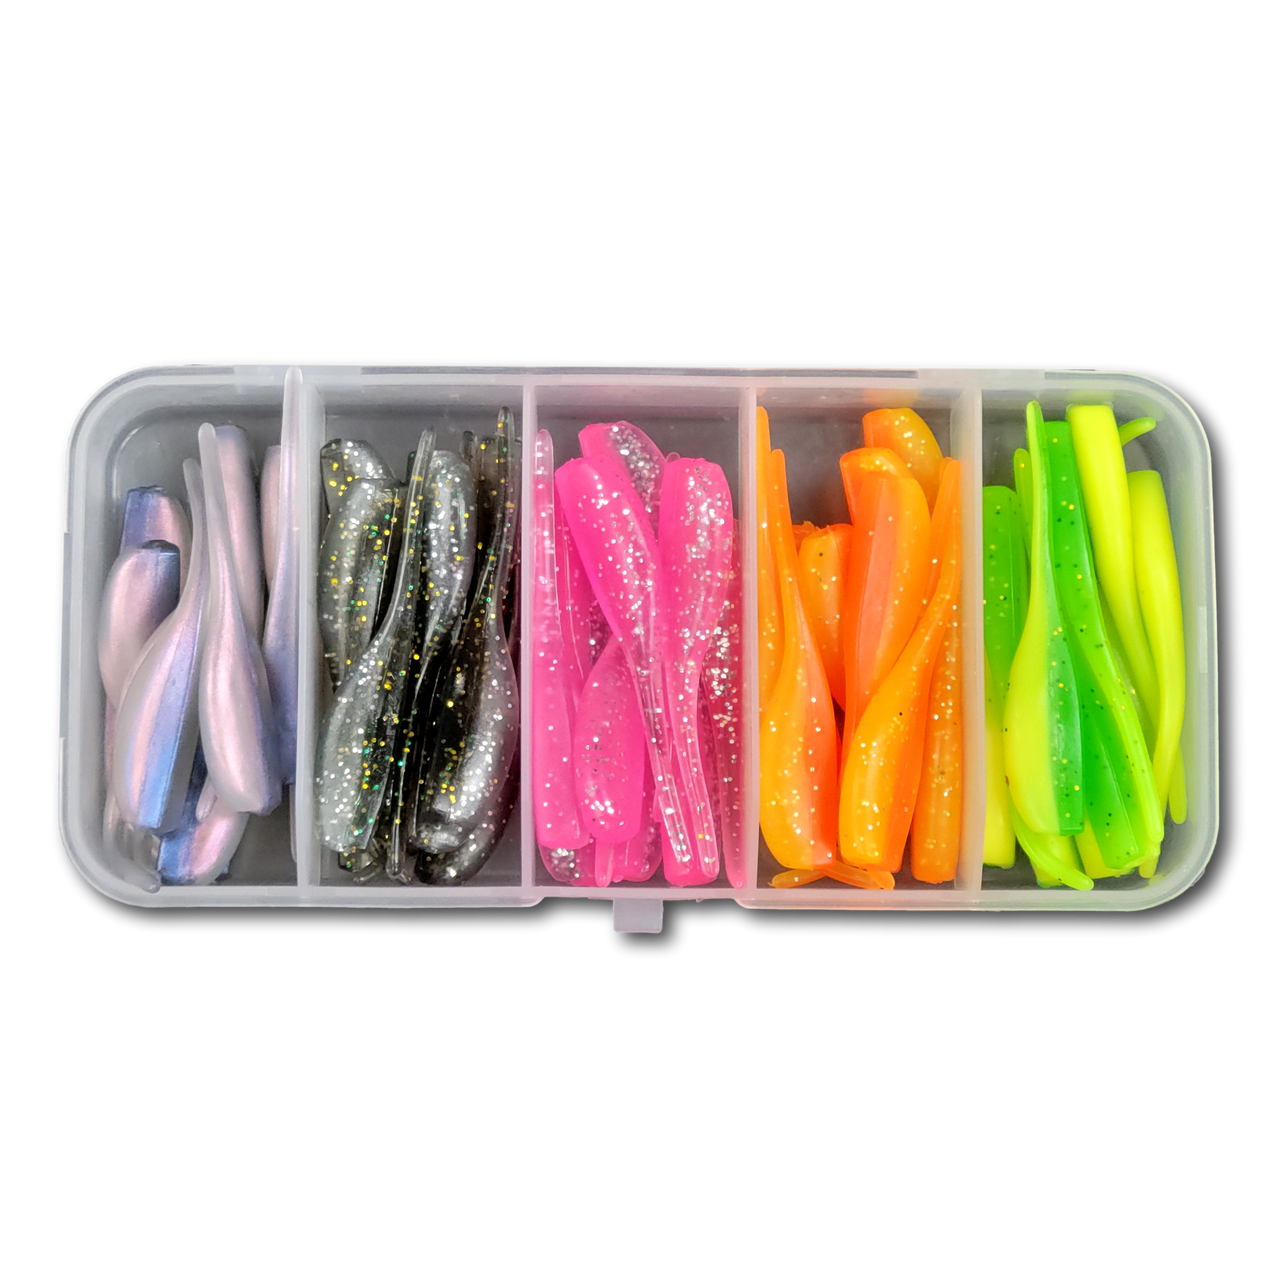 HIT Lures 2 Minnow Shad Plastics Kit - Versatile Color Range for Fishing